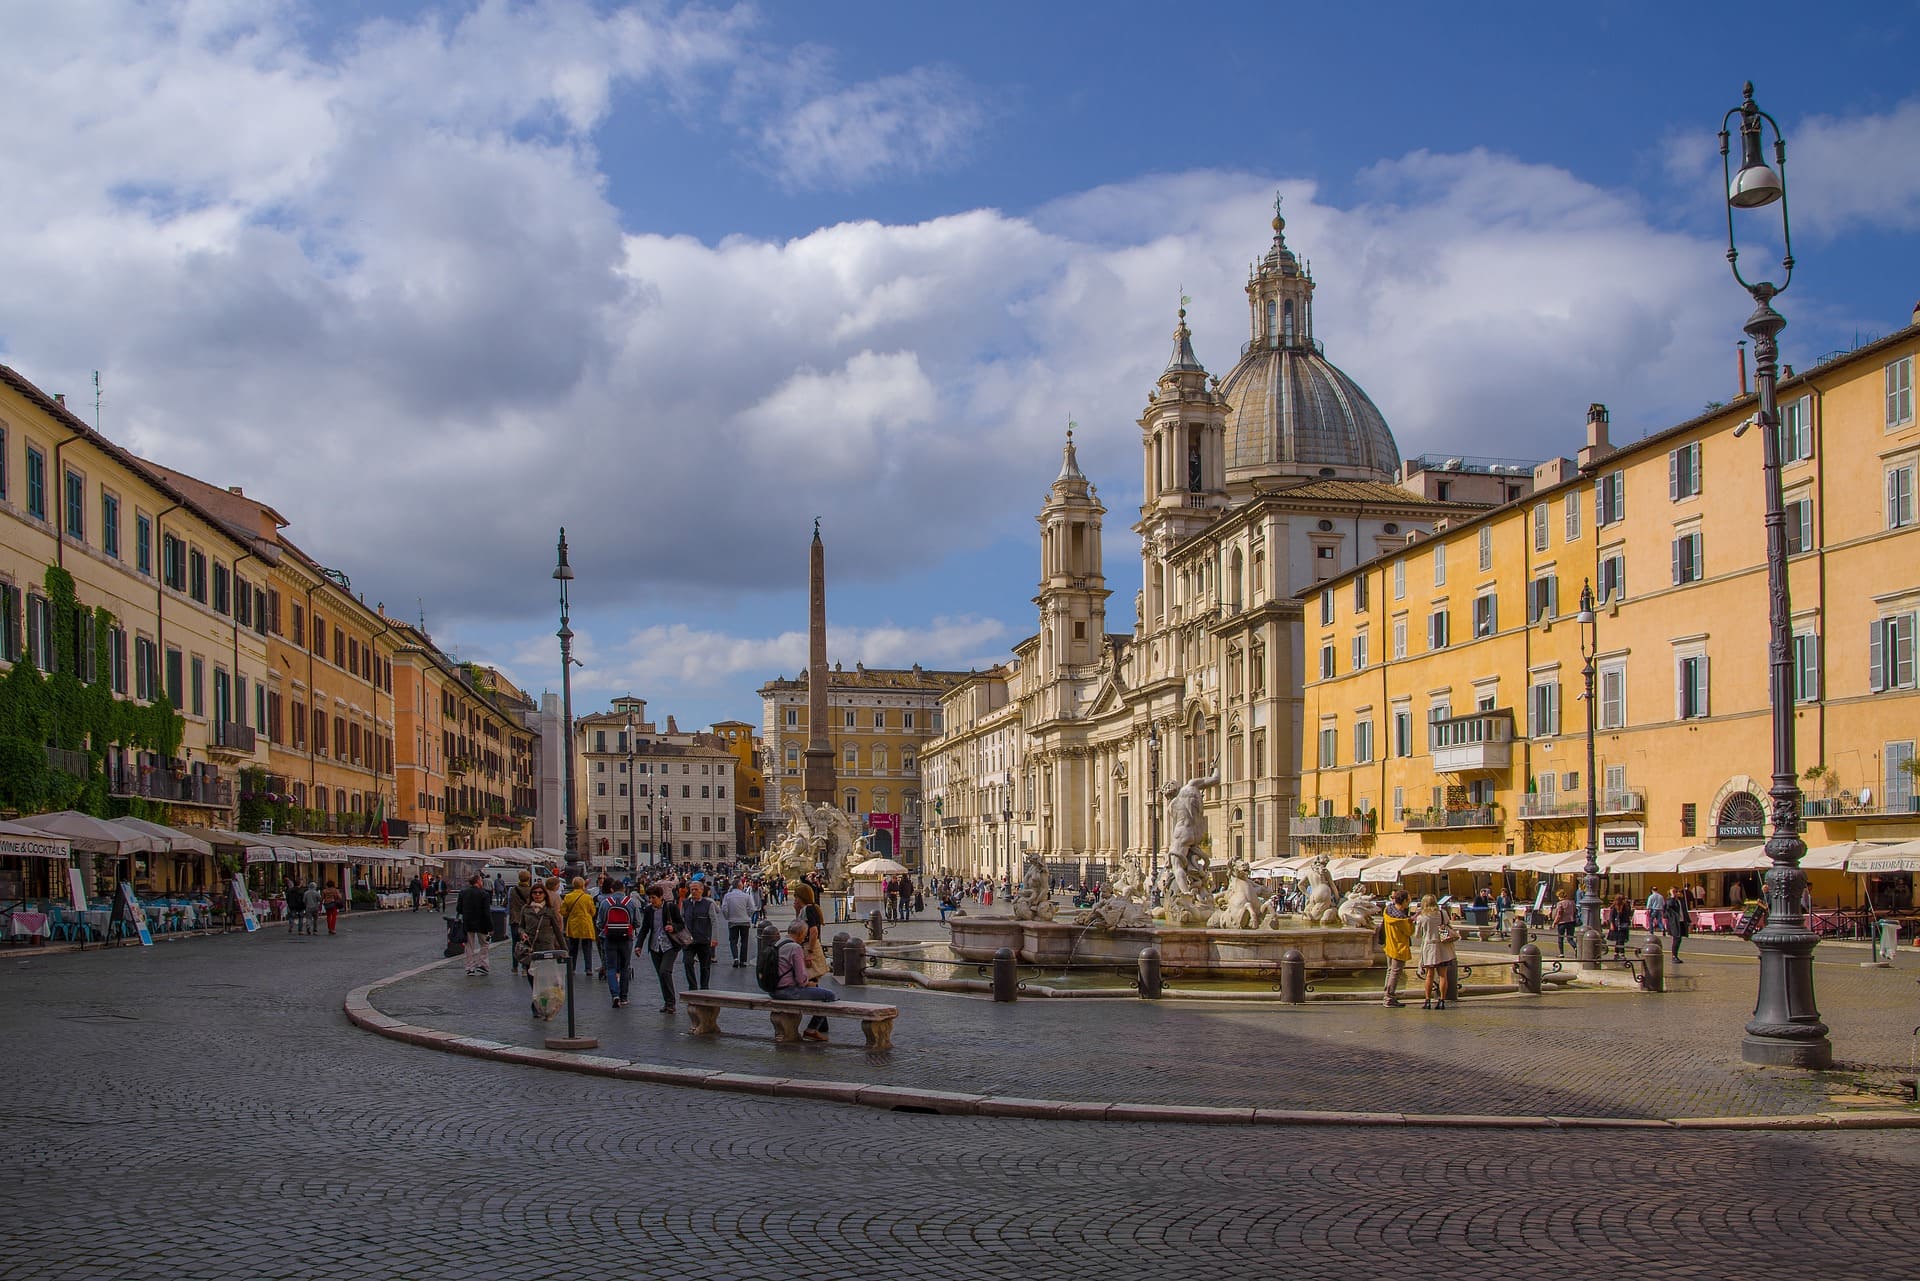 The Piazza Navona